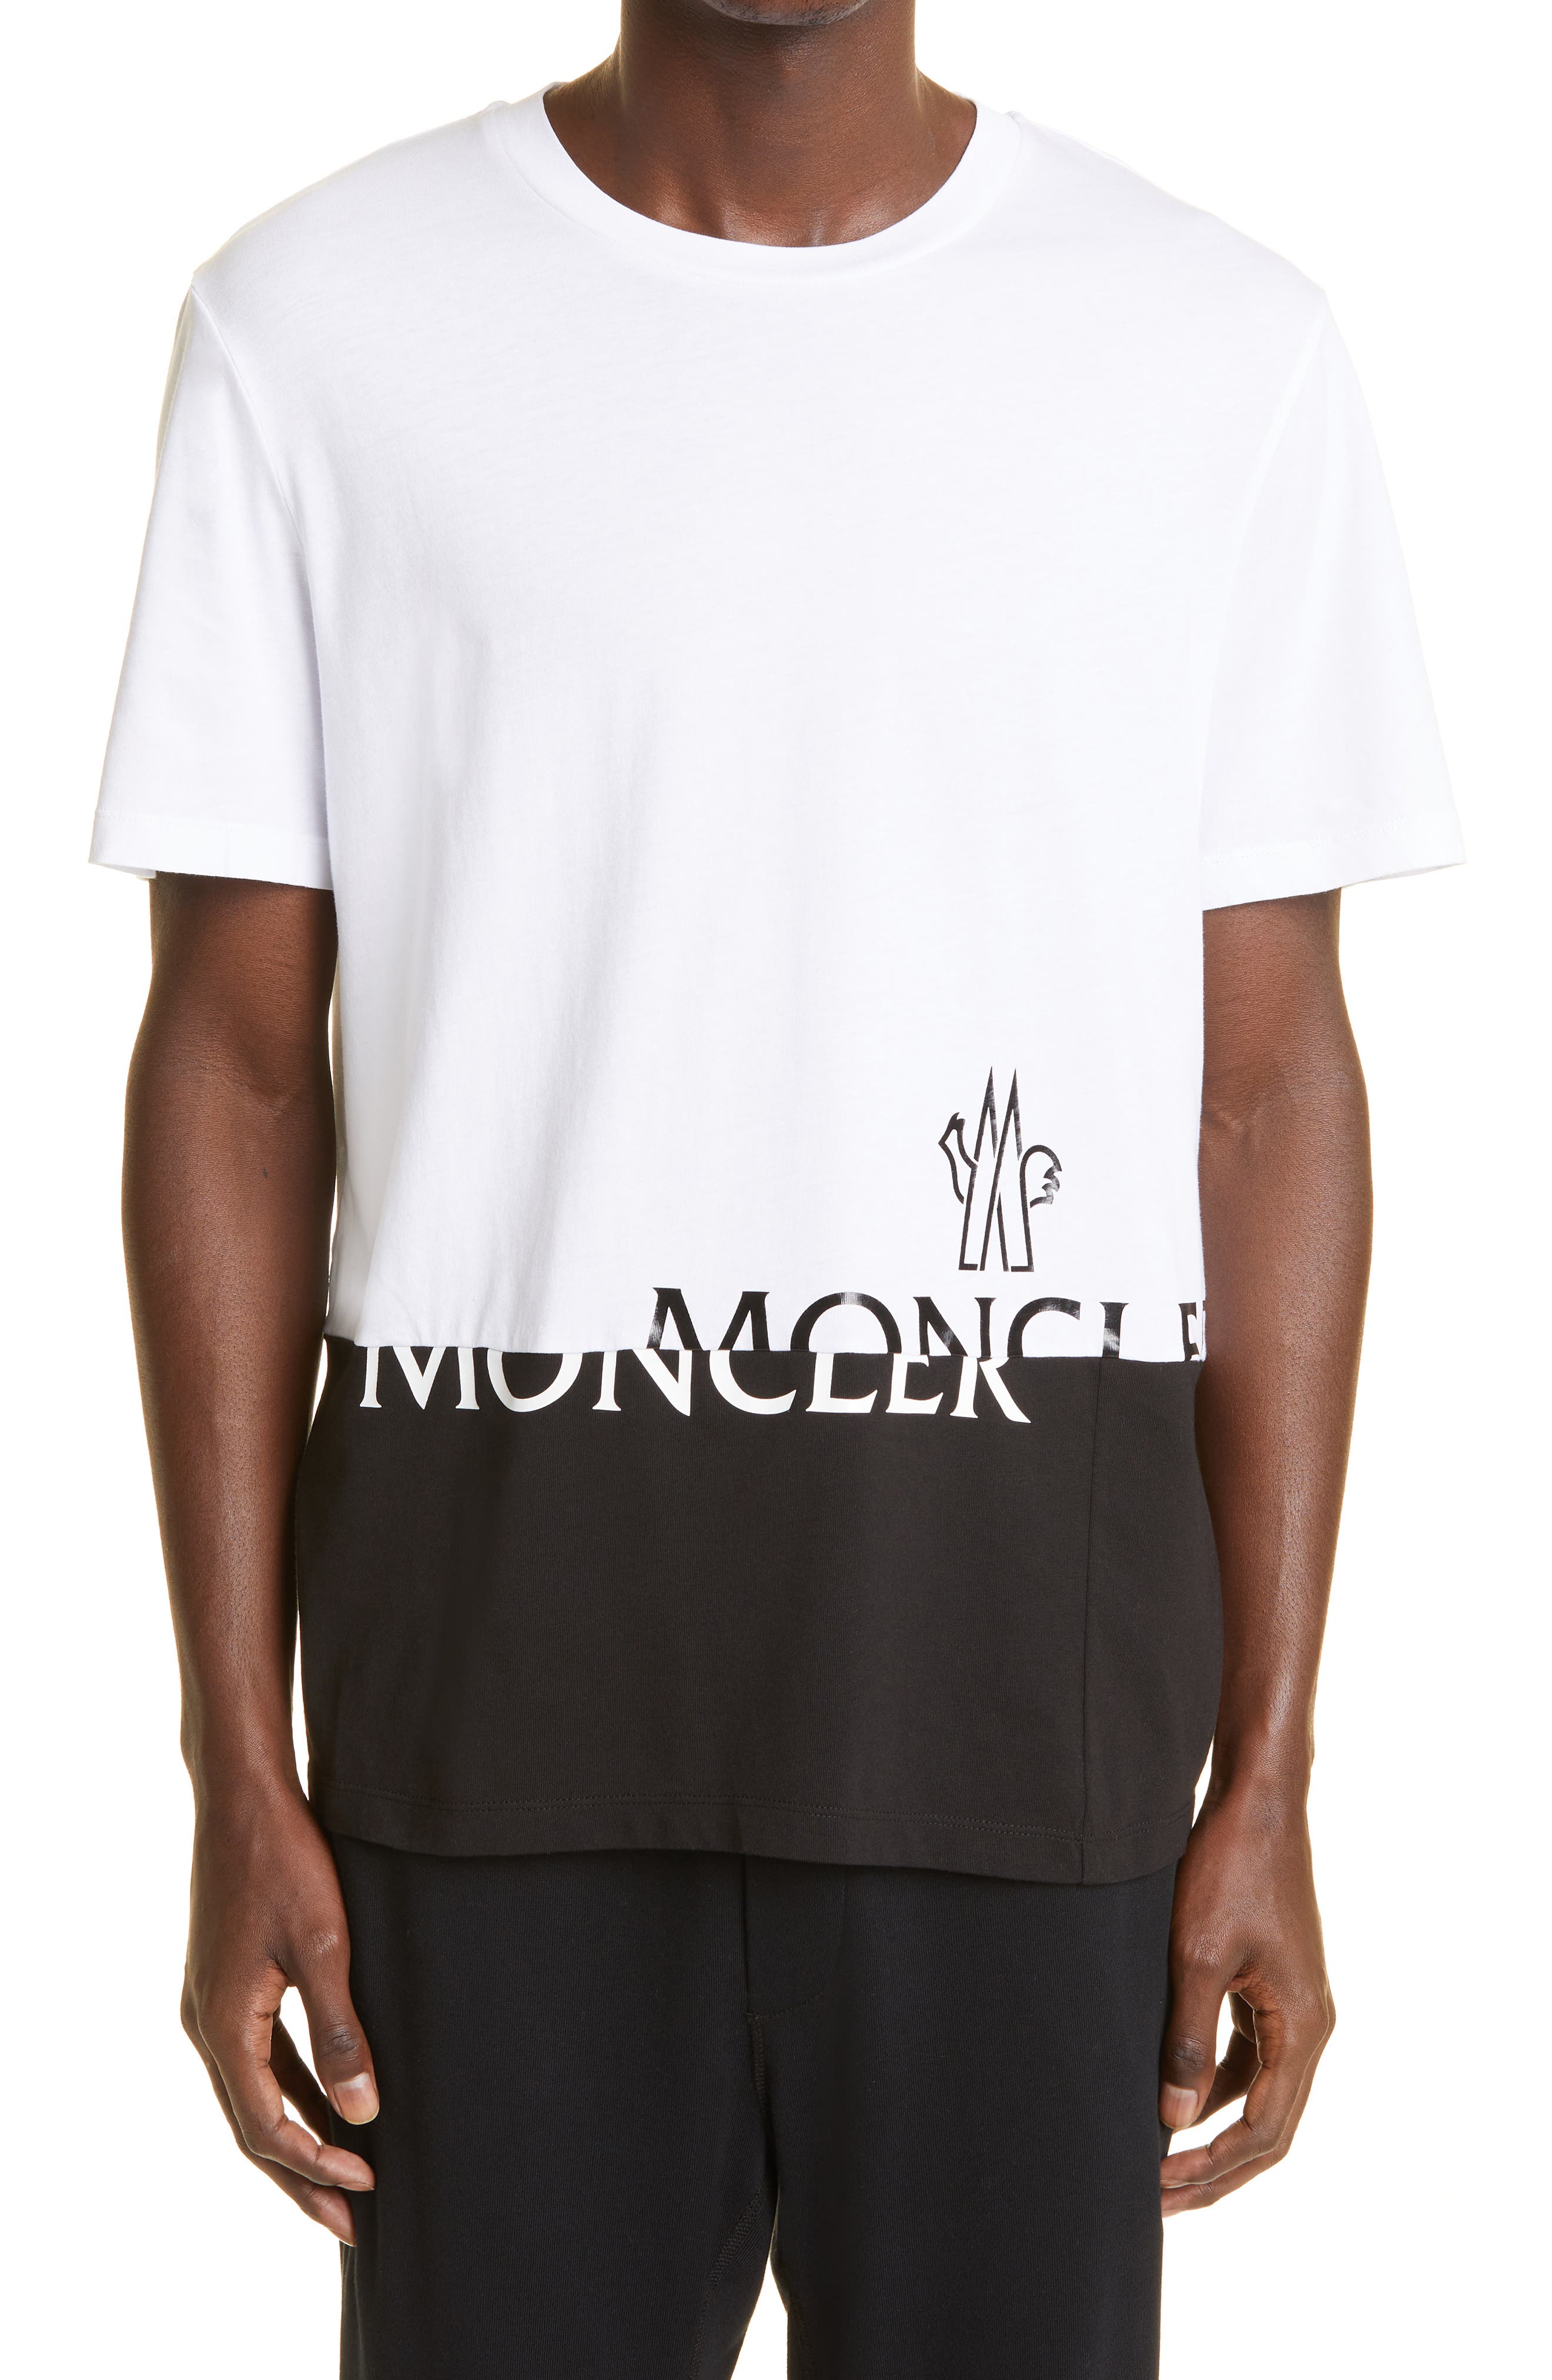 Moncler Split Logo Graphic Tee in White/Black at Nordstrom, Size Xx-Large